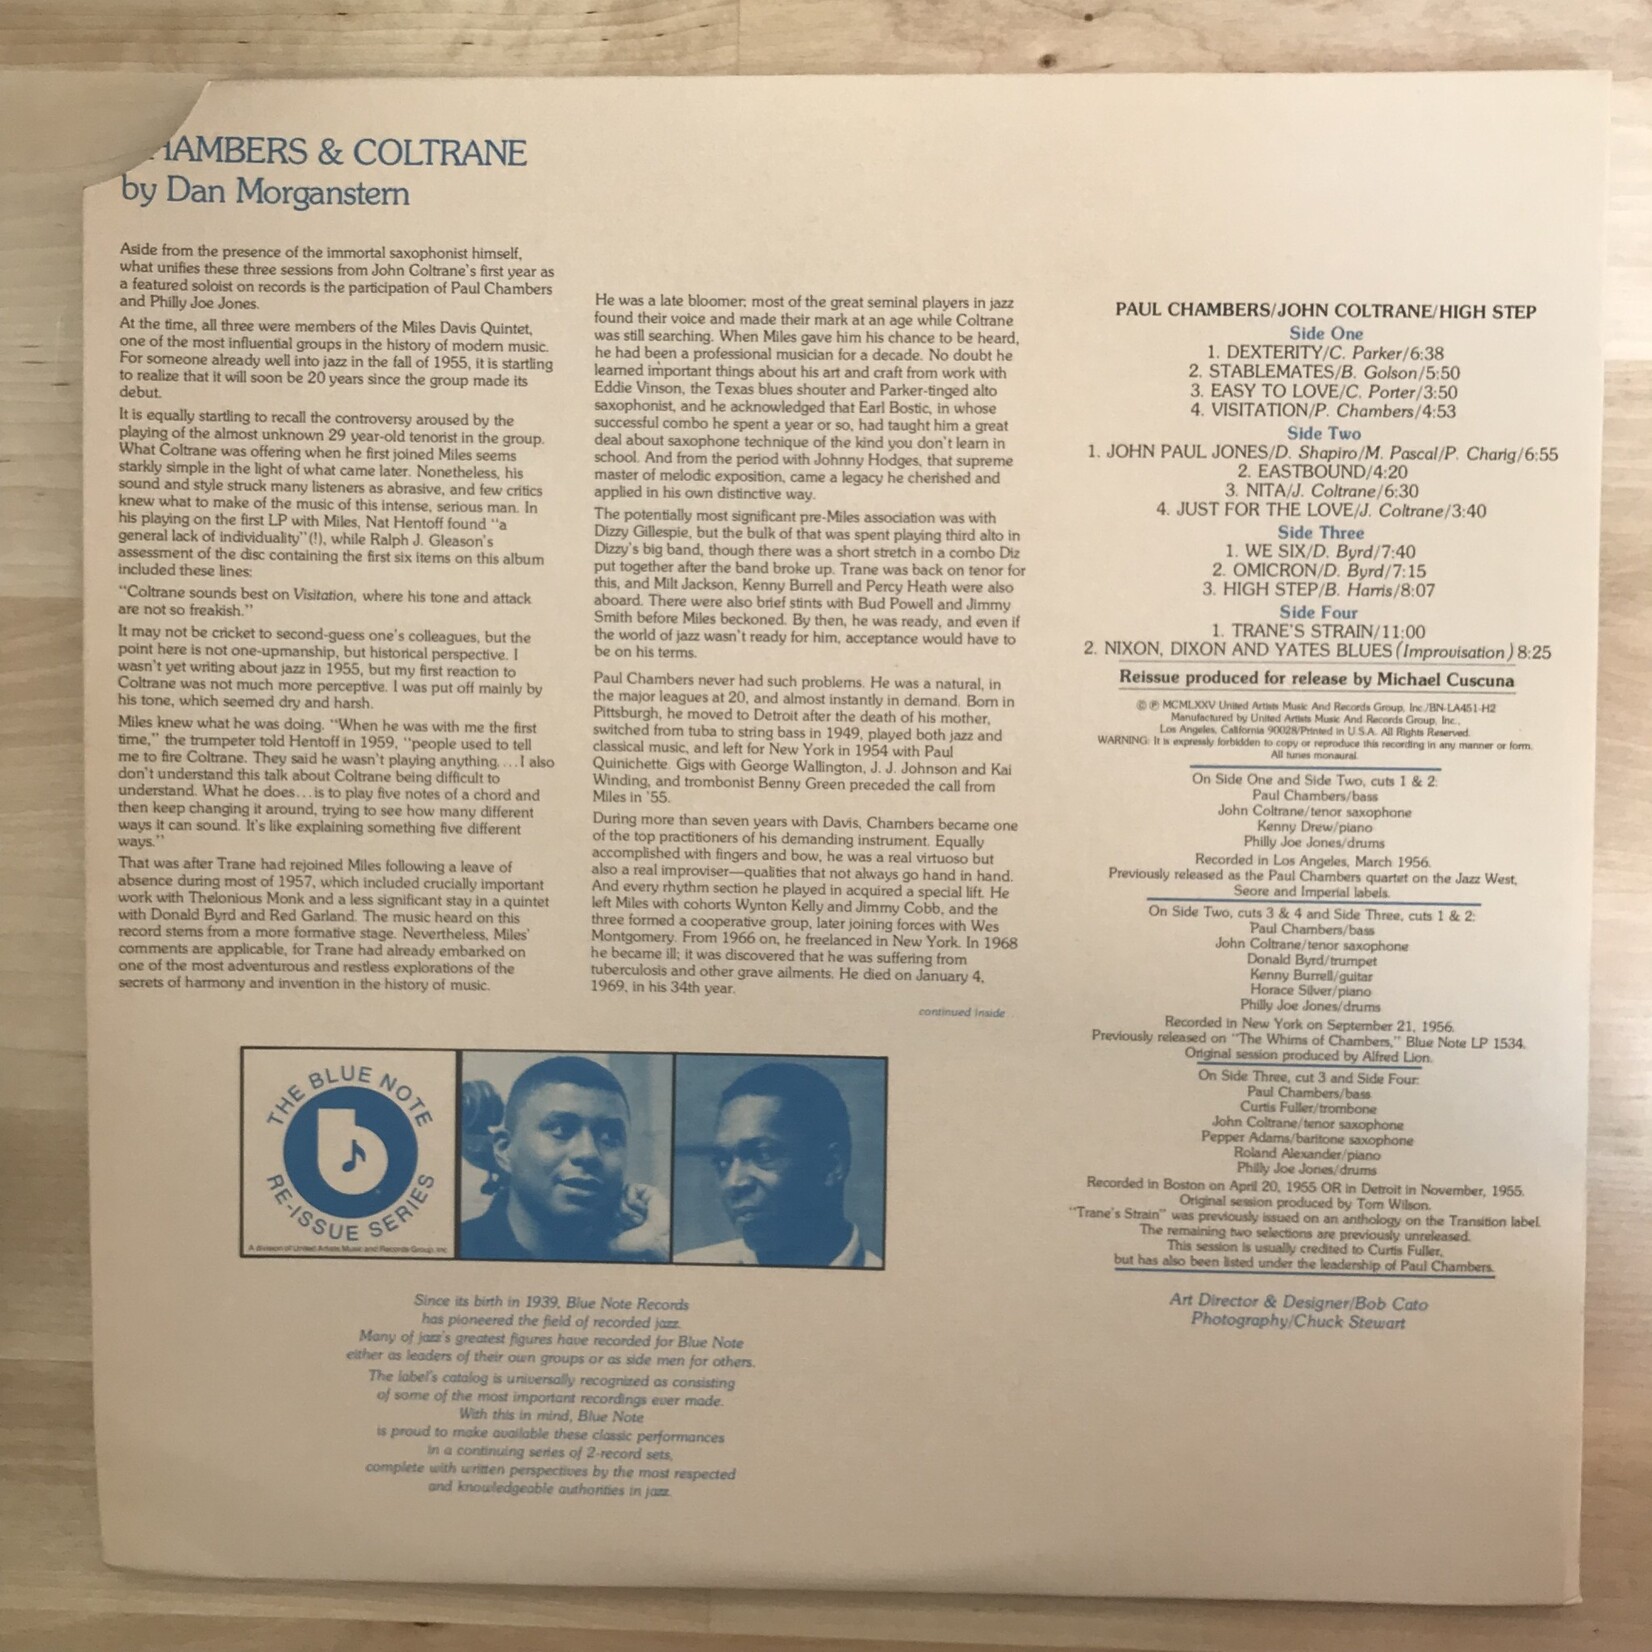 Paul Chambers, John Coltrane - High Step - BN LA451 2 - Vinyl LP (USED)